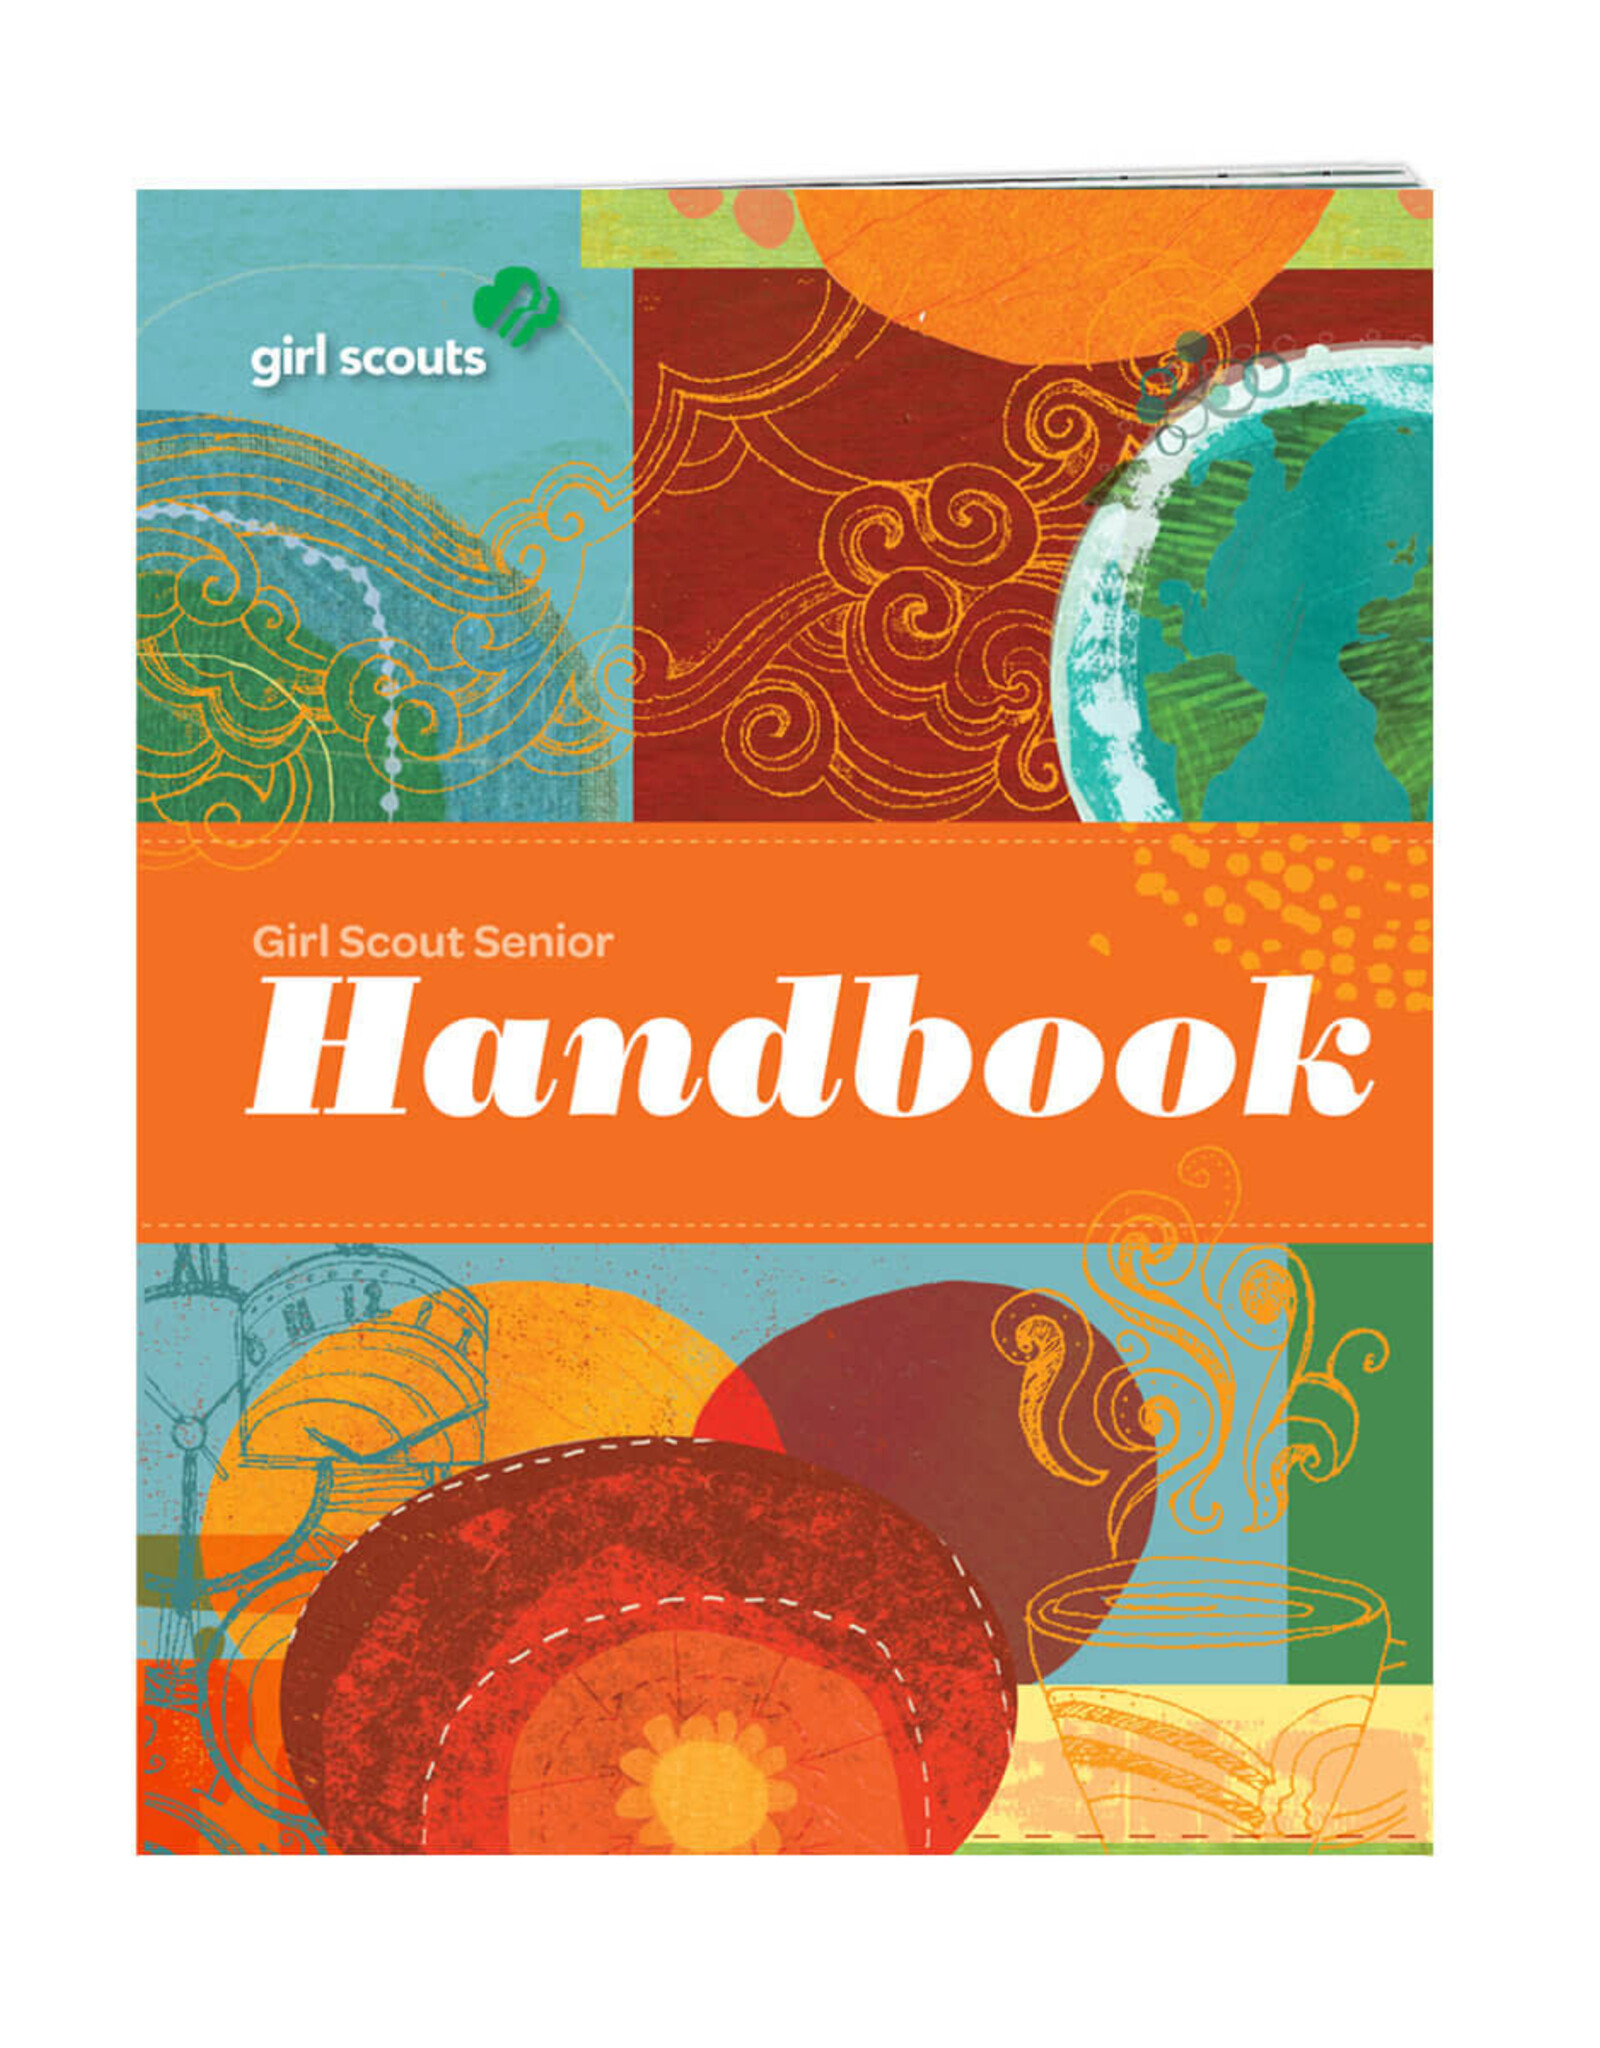 Girl Scout Senior Handbook